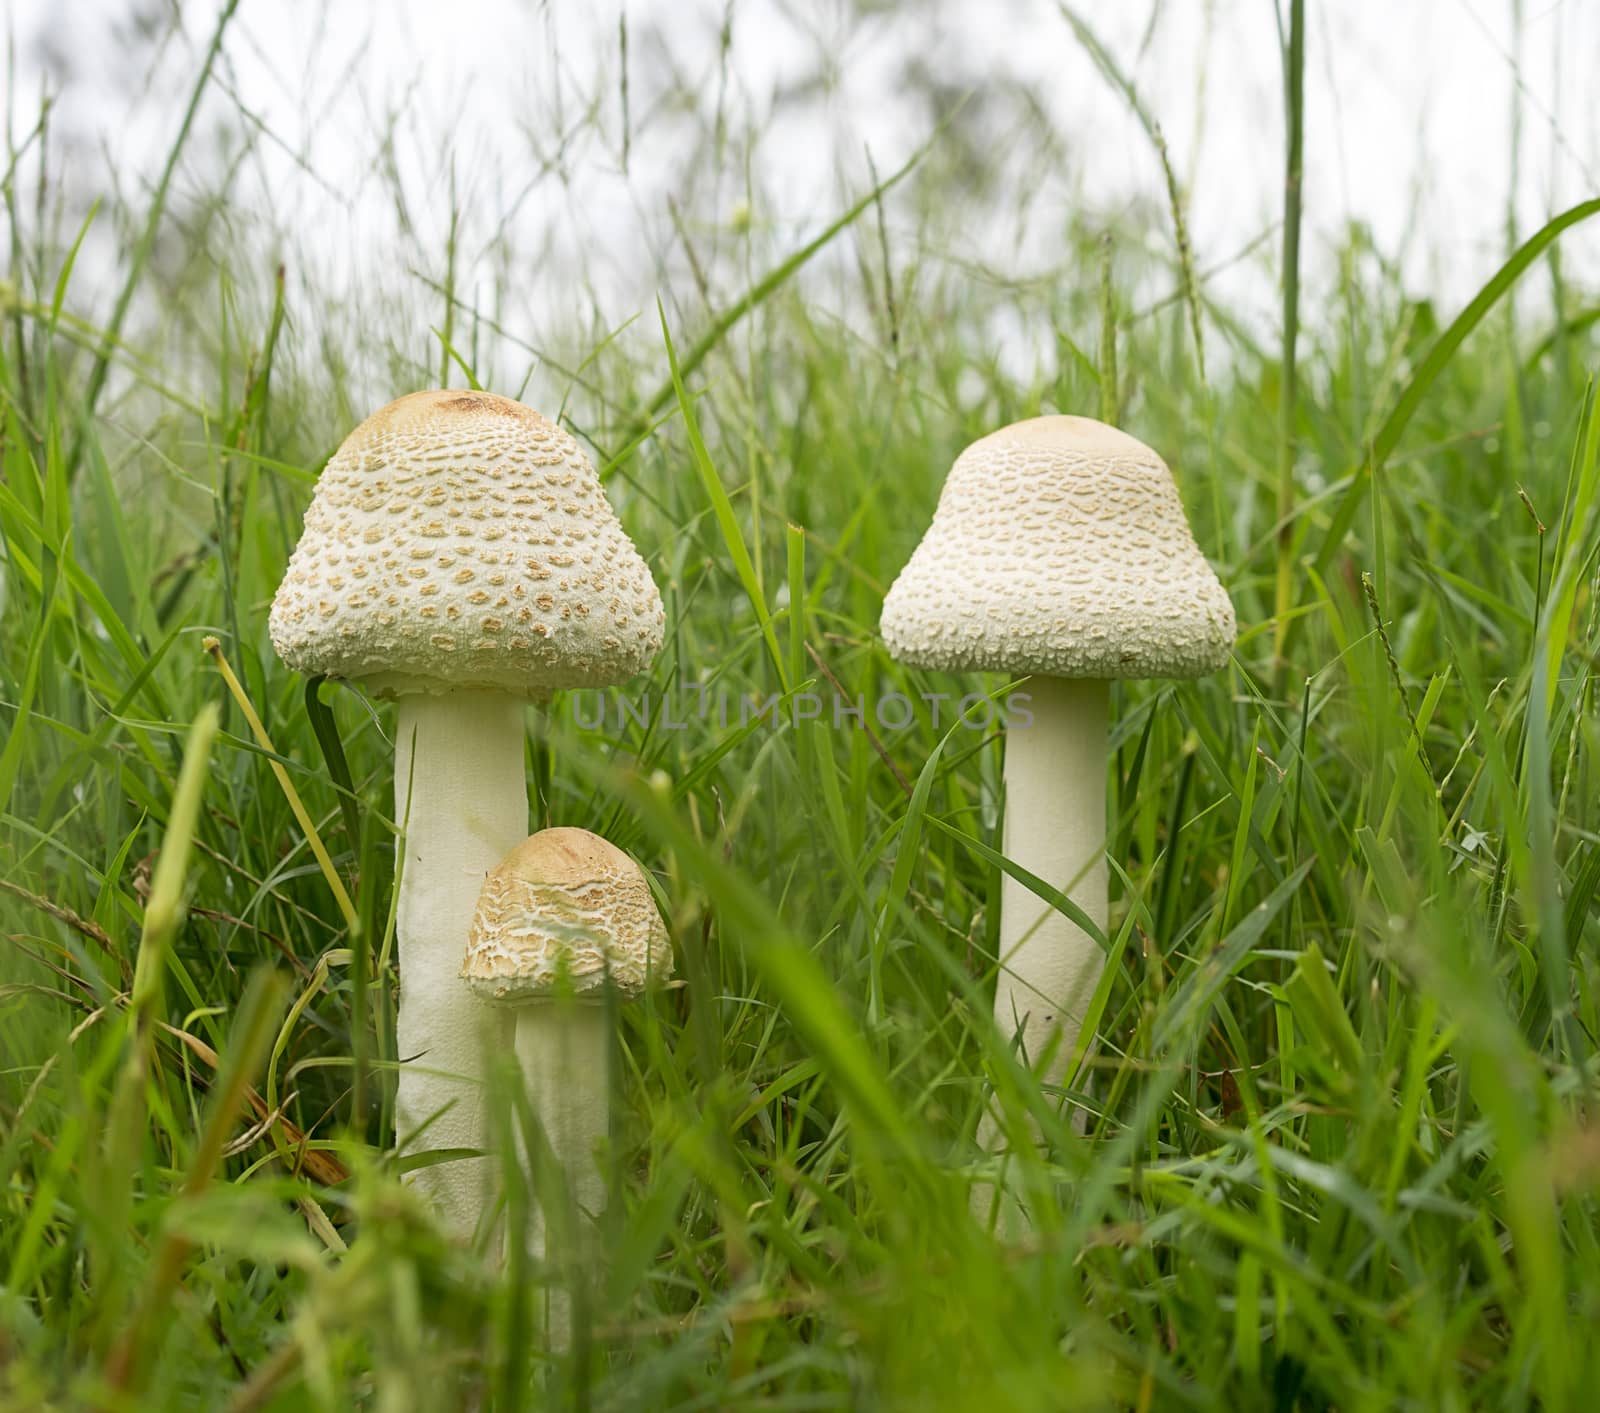 Australia Three Parasol Mushrooms in Long Green grass by sherj